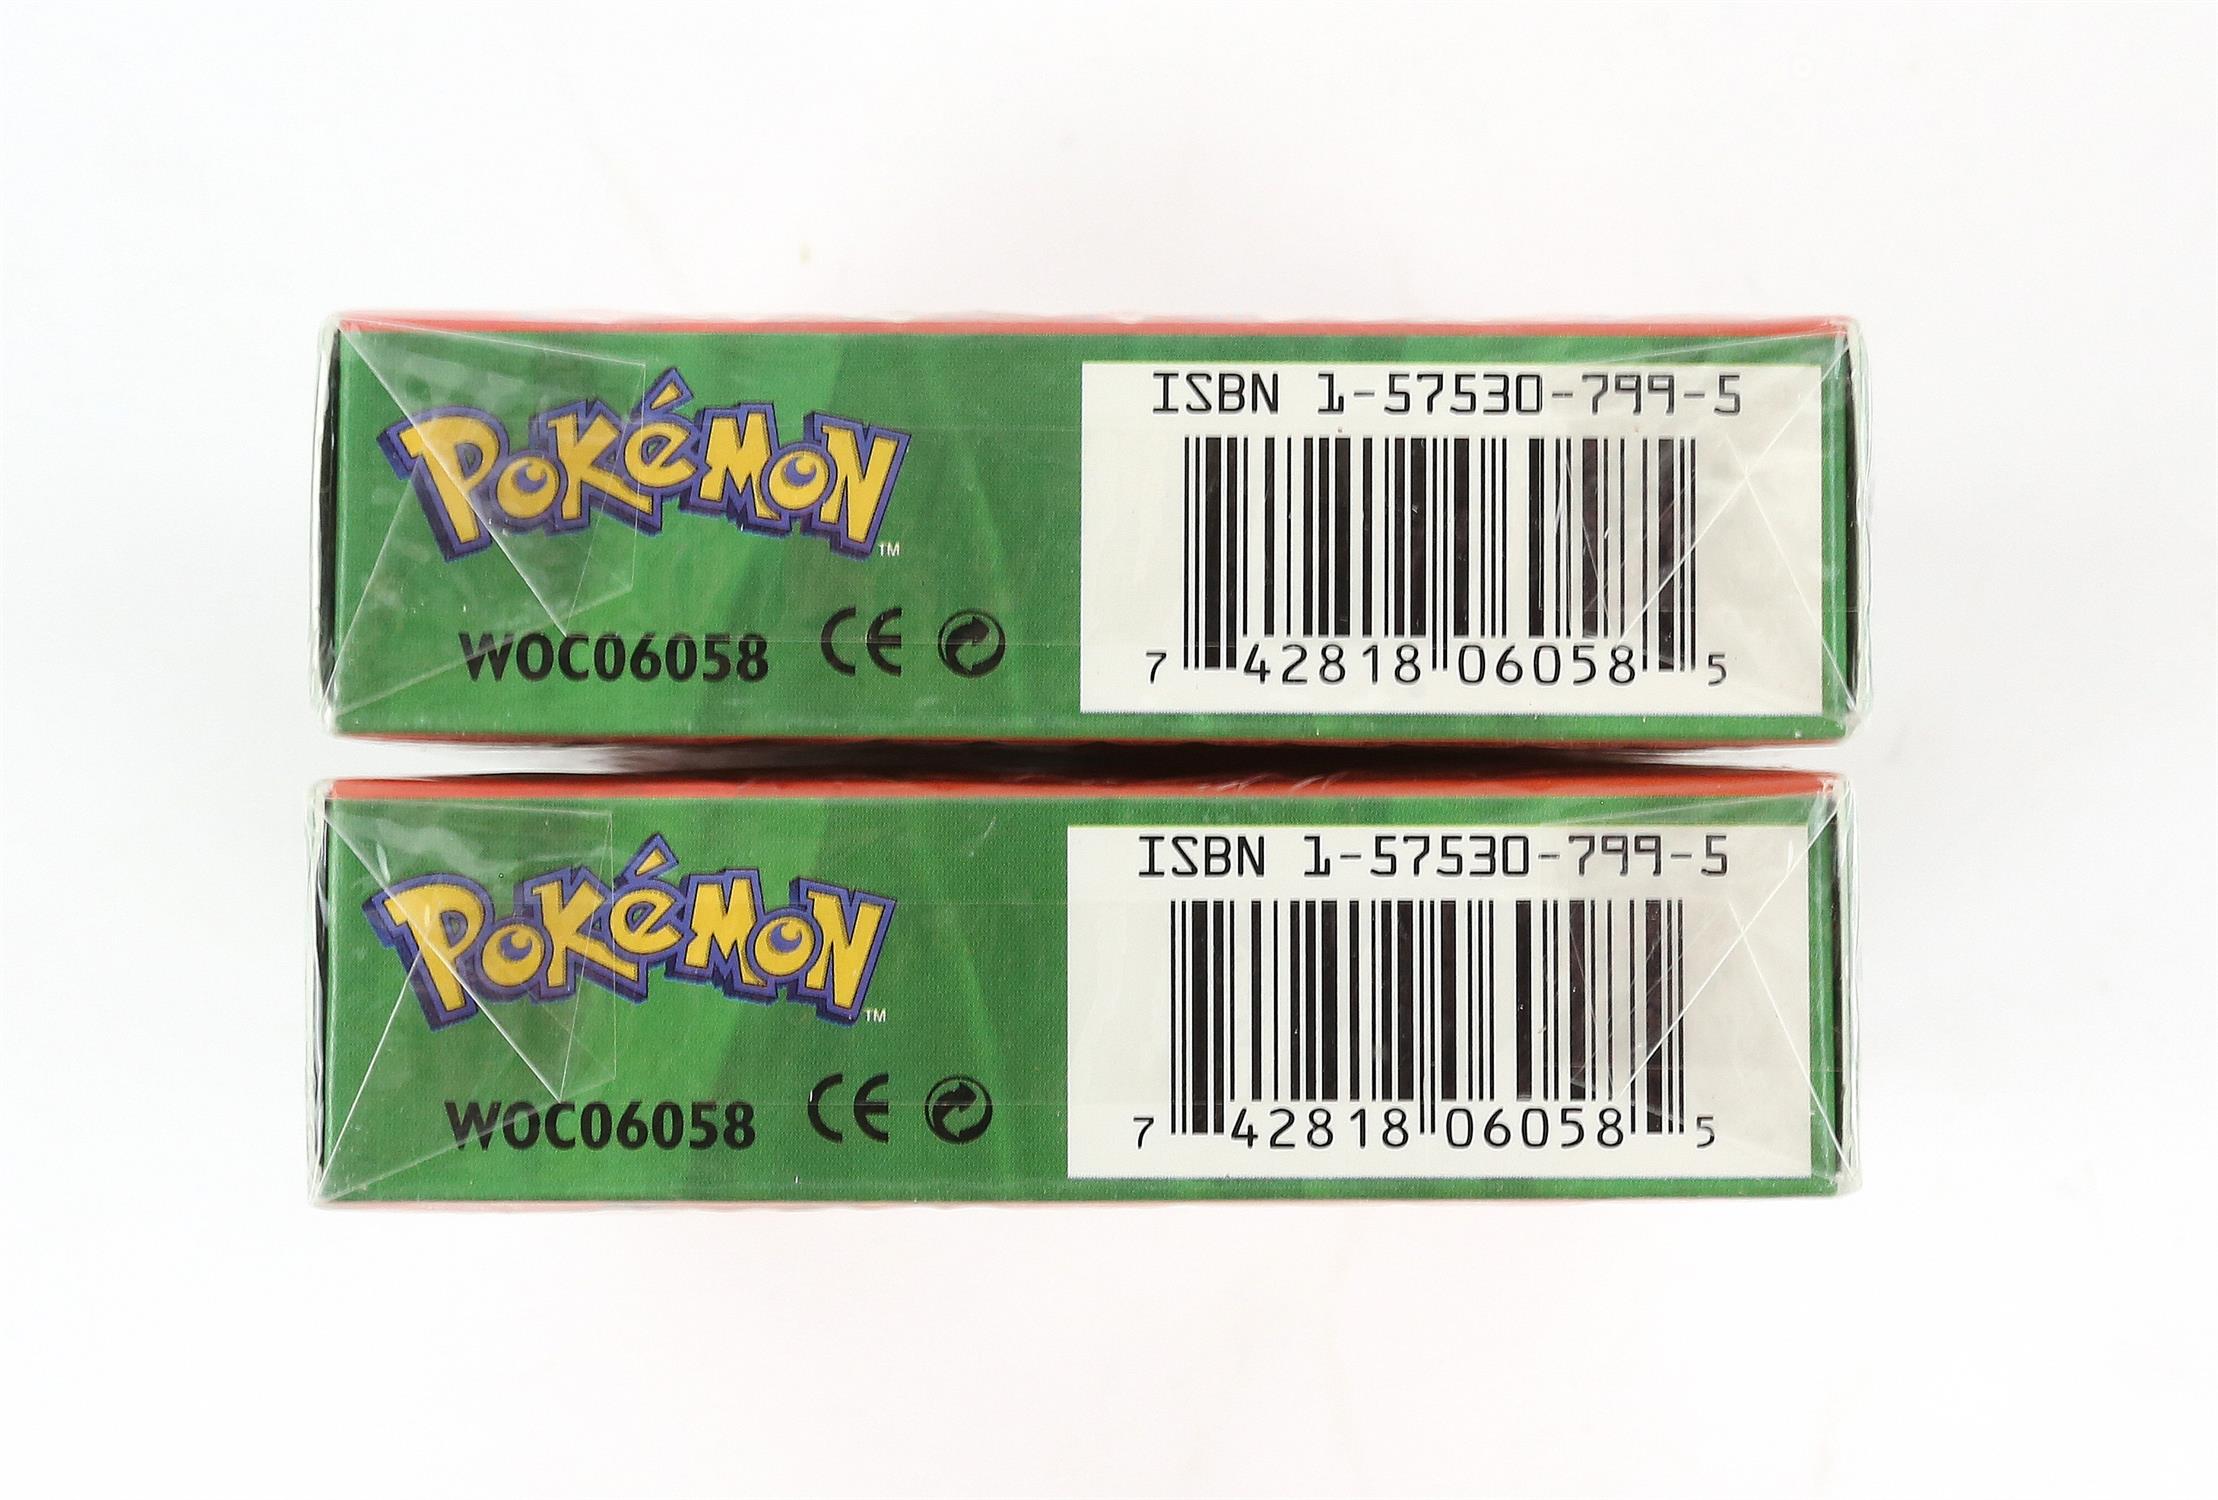 Pokemon TCG Two Base Set Brushfire Theme Decks, sealed in original packaging (2). - Image 2 of 2